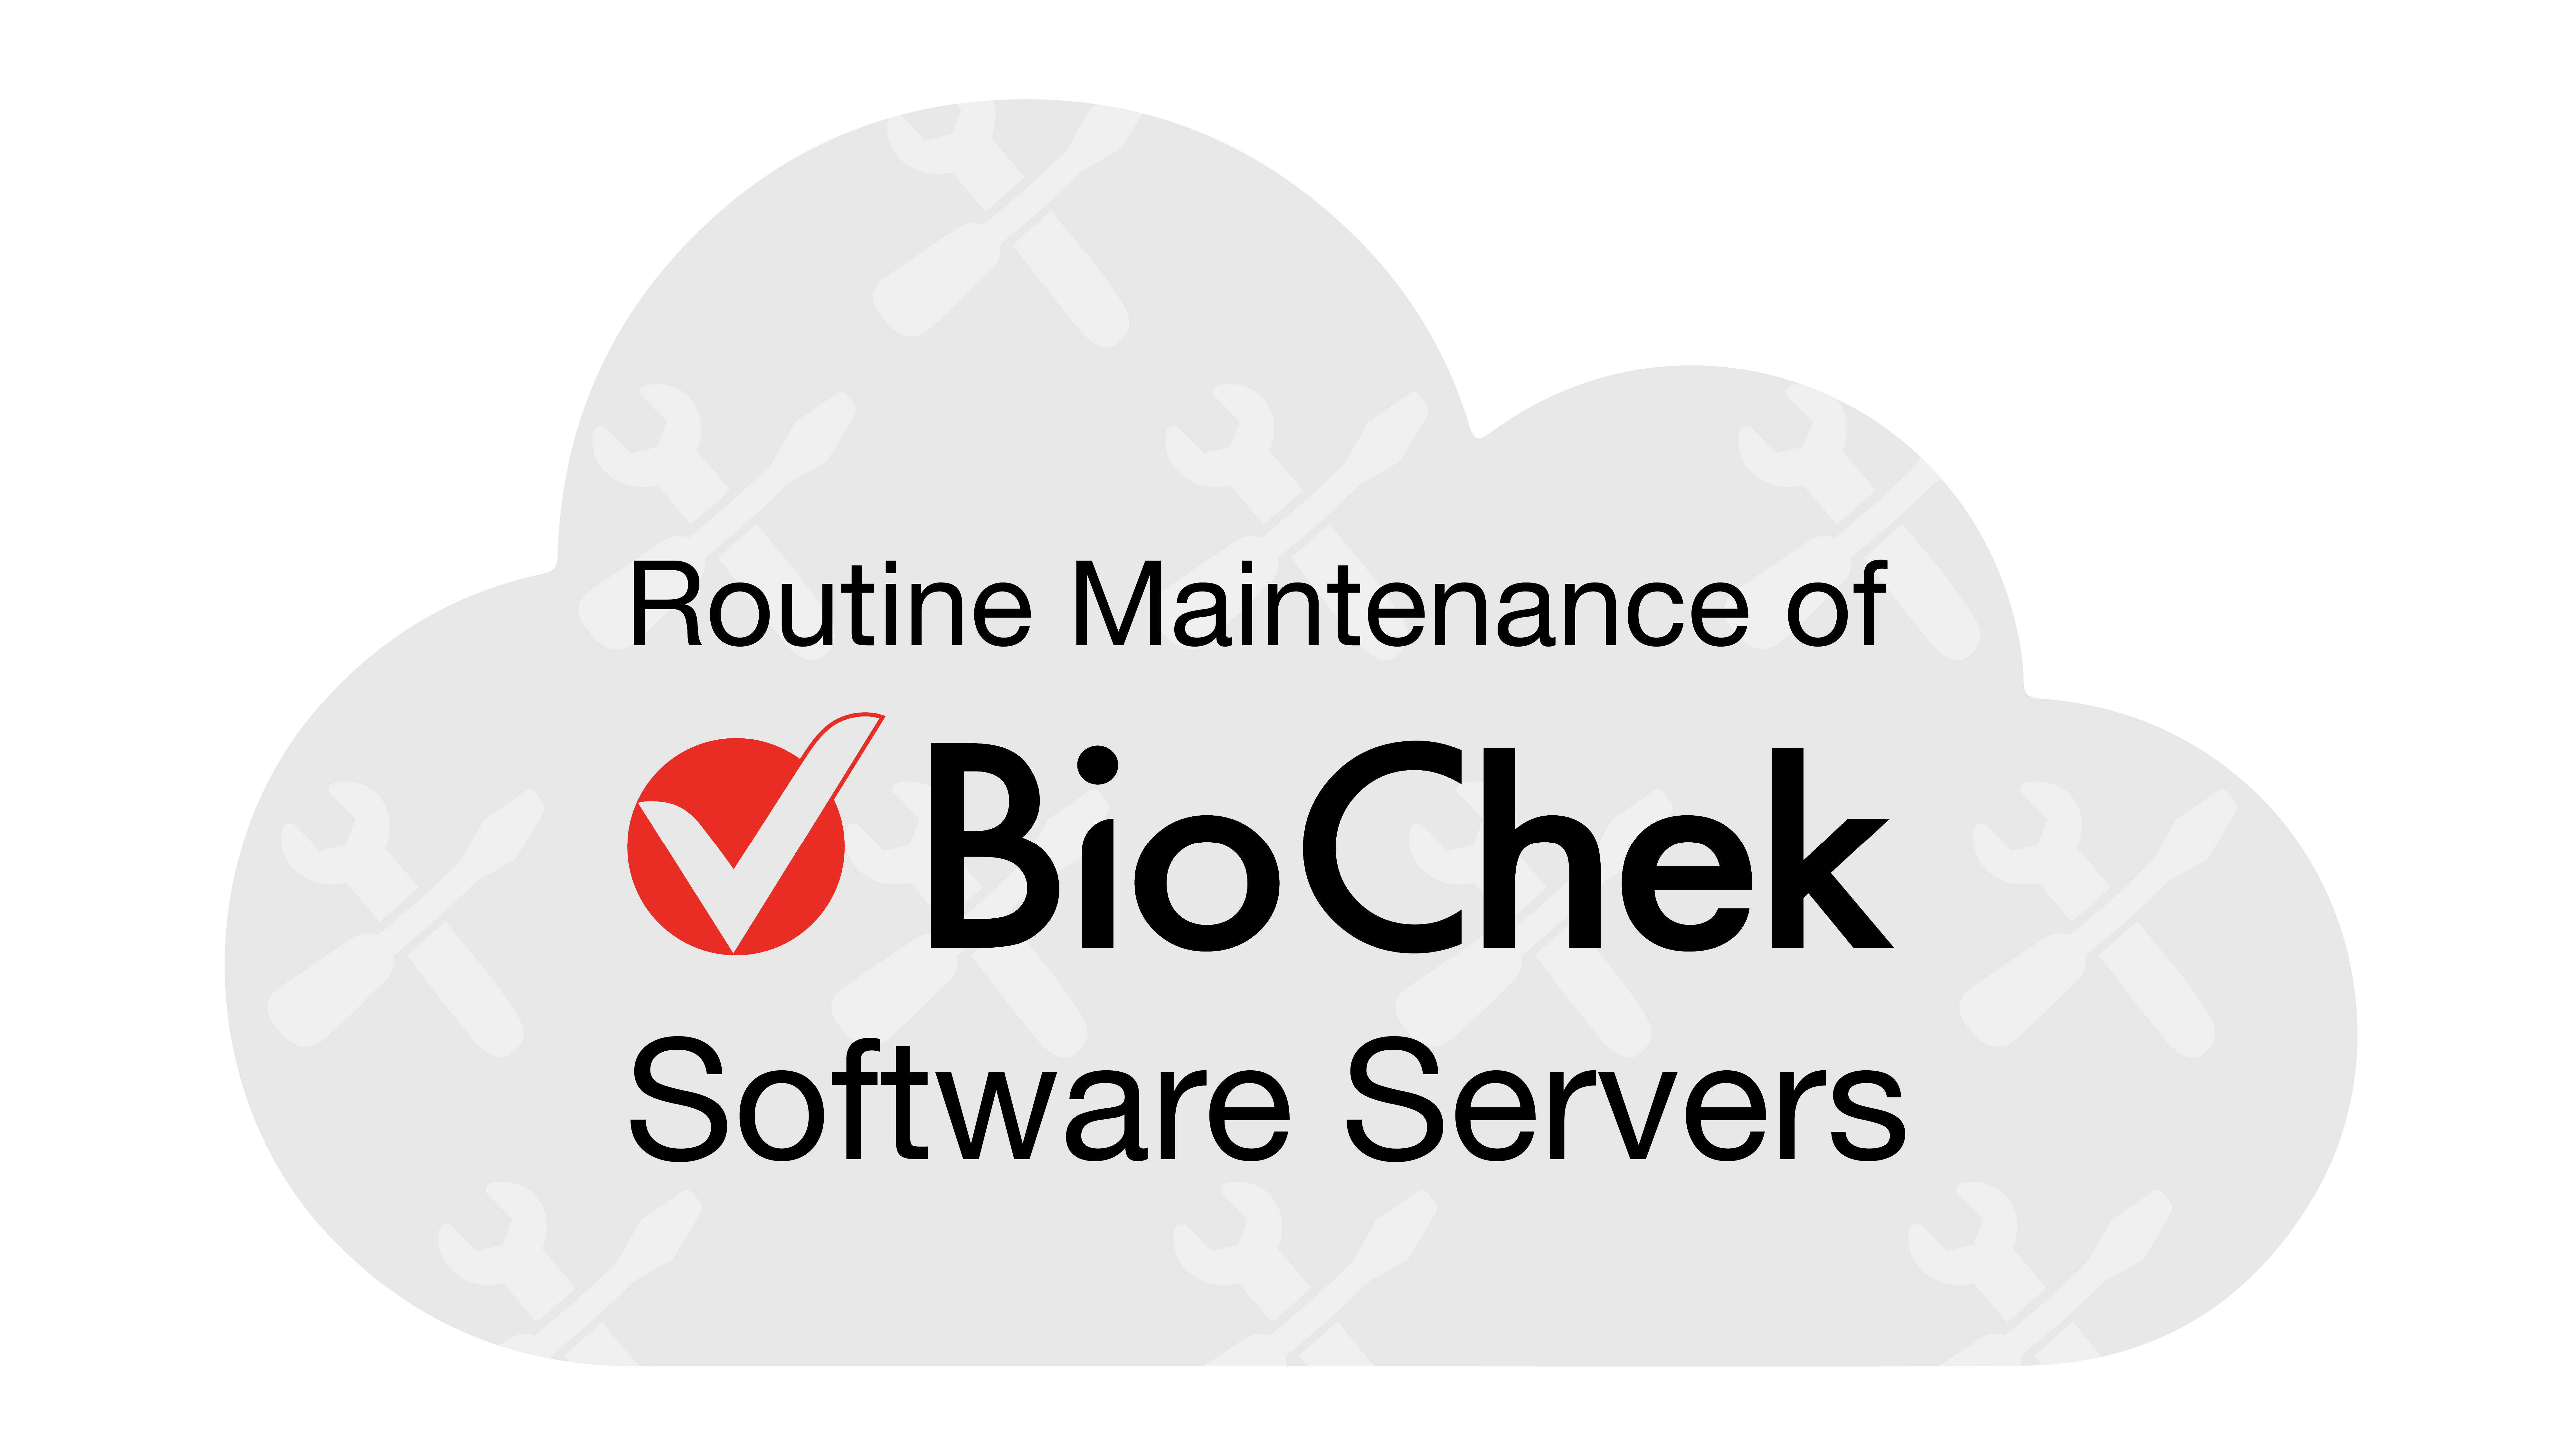 Maintenance for the BioChek Software servers